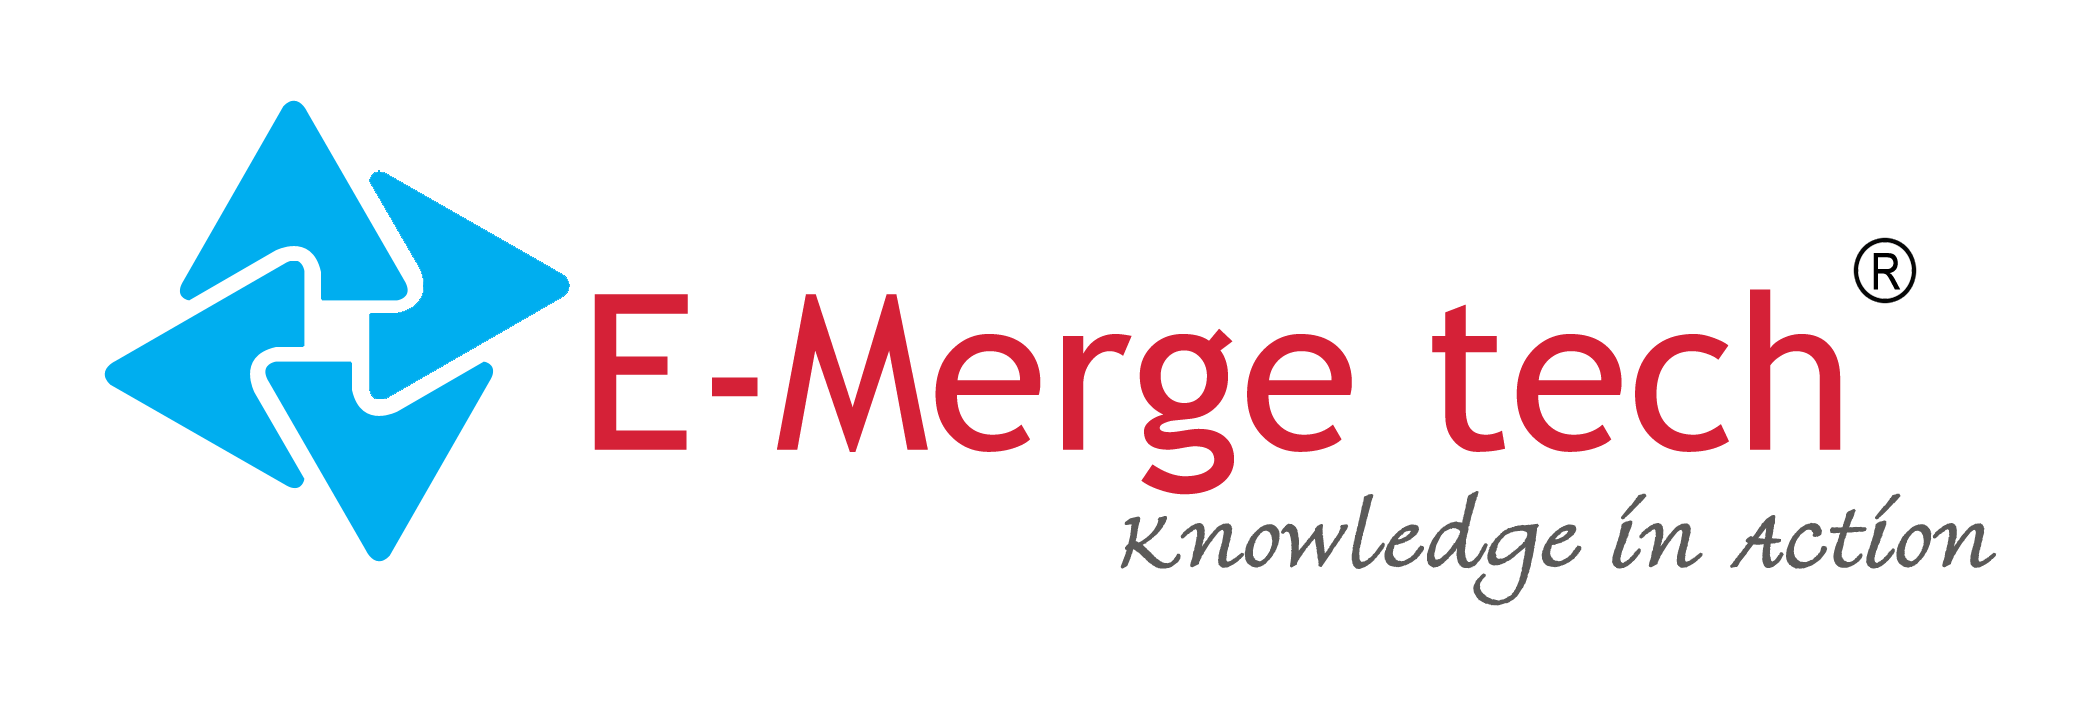 E-Merge tech Global Services Logo